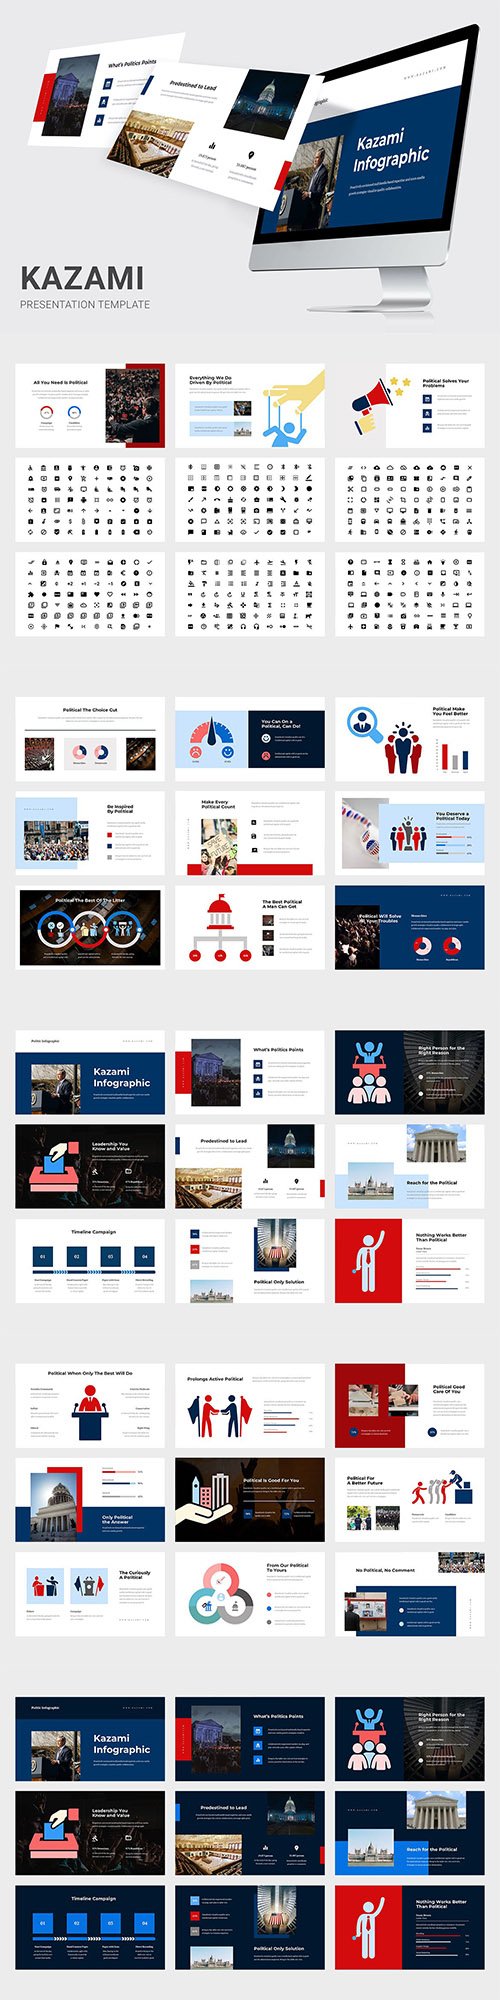 Kazami - Political Campaign Infographic PowerPoint, Keynote, Google Slides